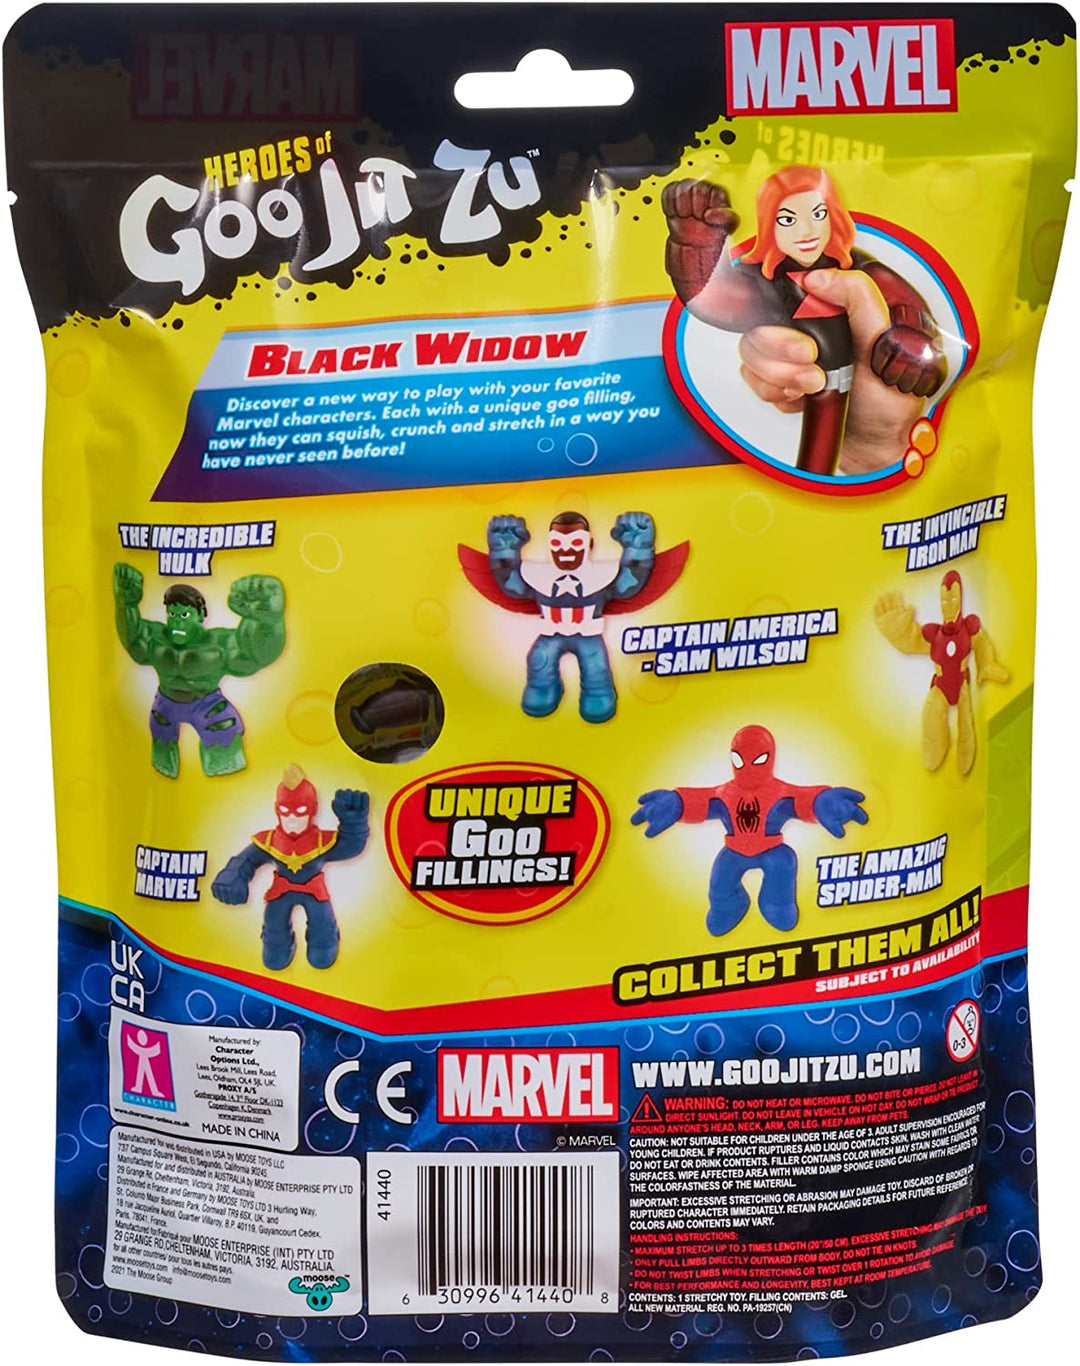 Heroes of Goo Jit Zu Marvel Hero Pack. Black Widow - Squishy 4.5-Inch Tall. Idea